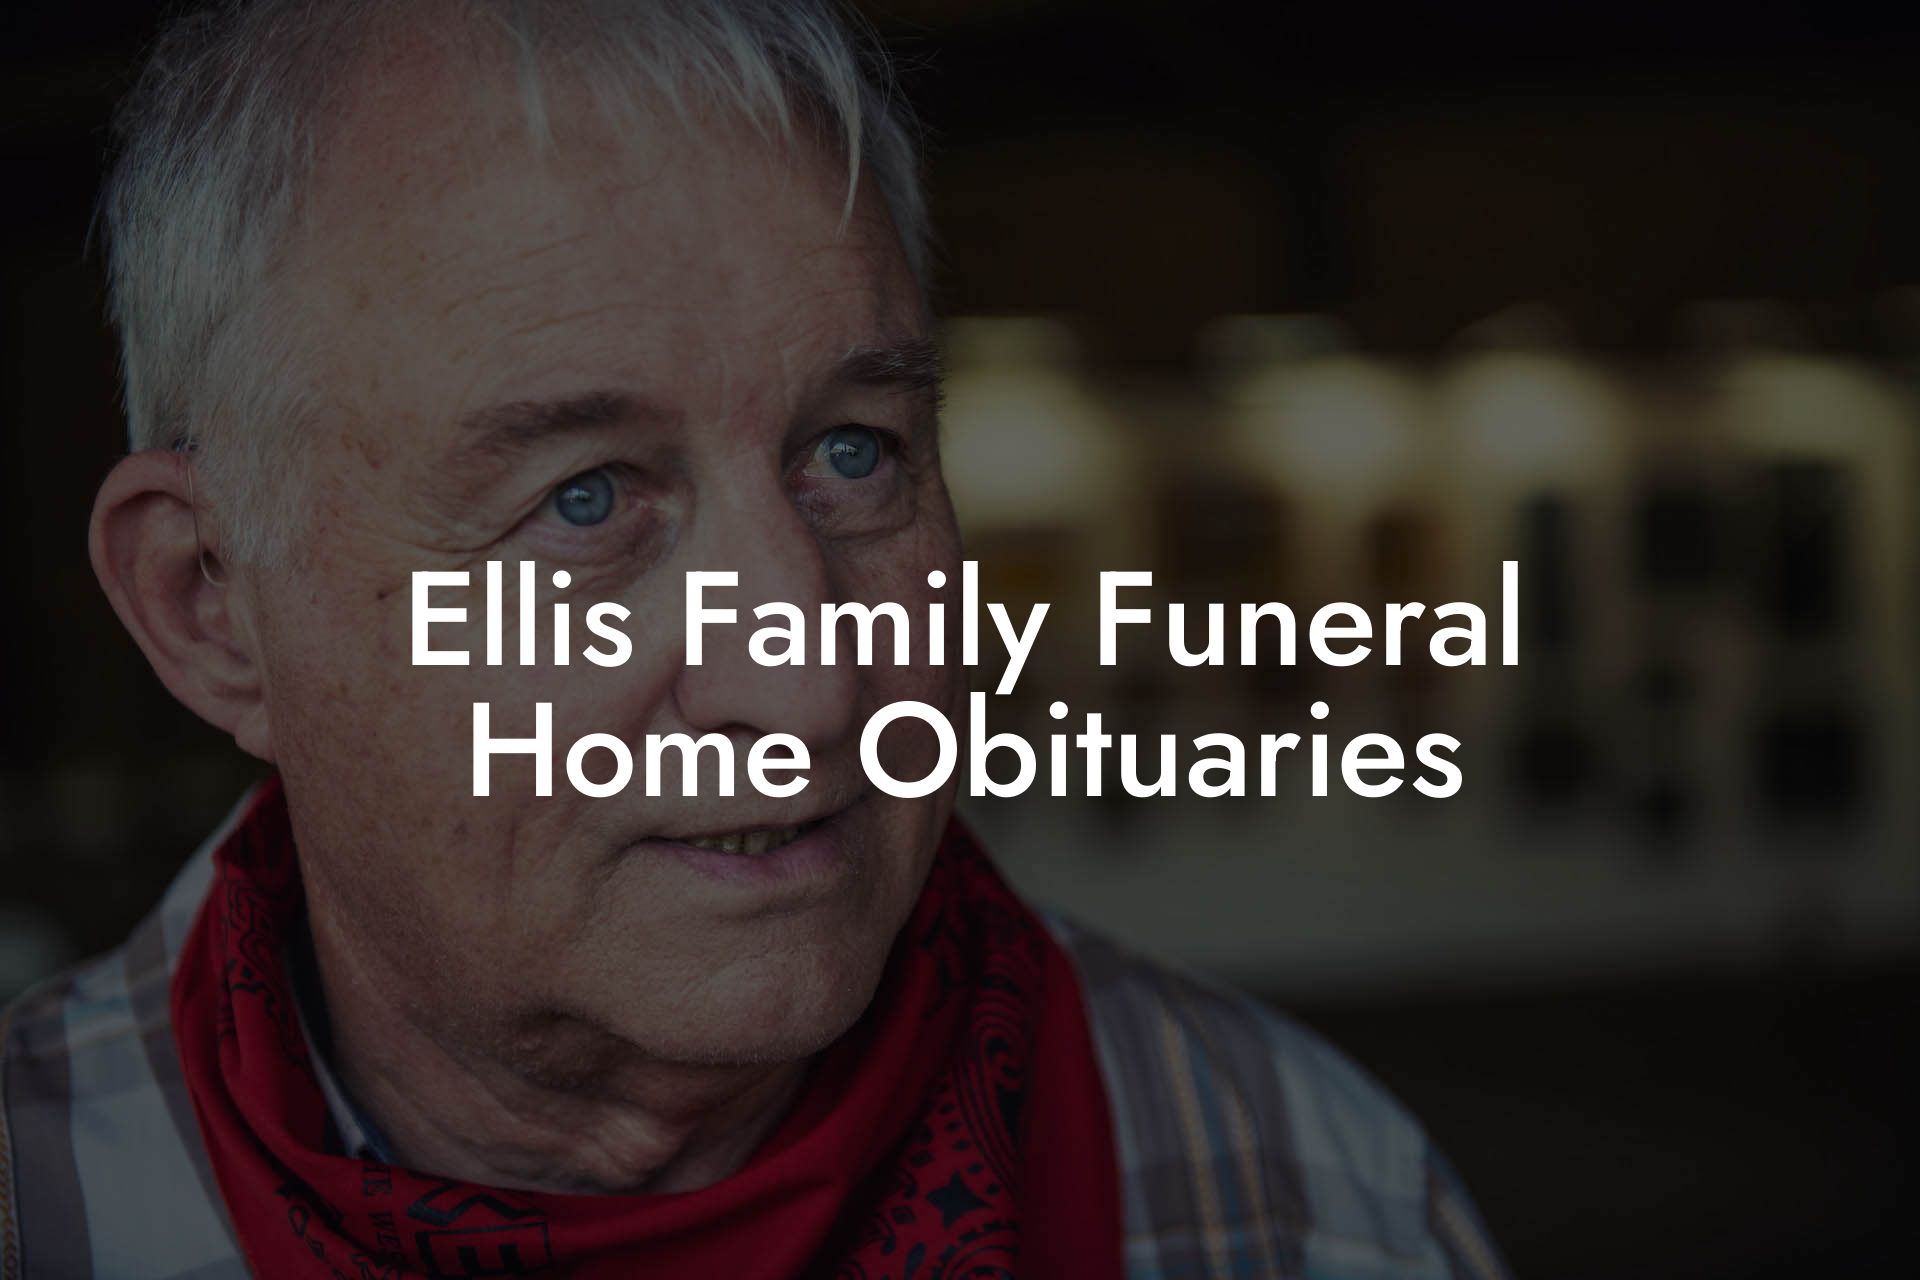 Ellis Family Funeral Home Obituaries